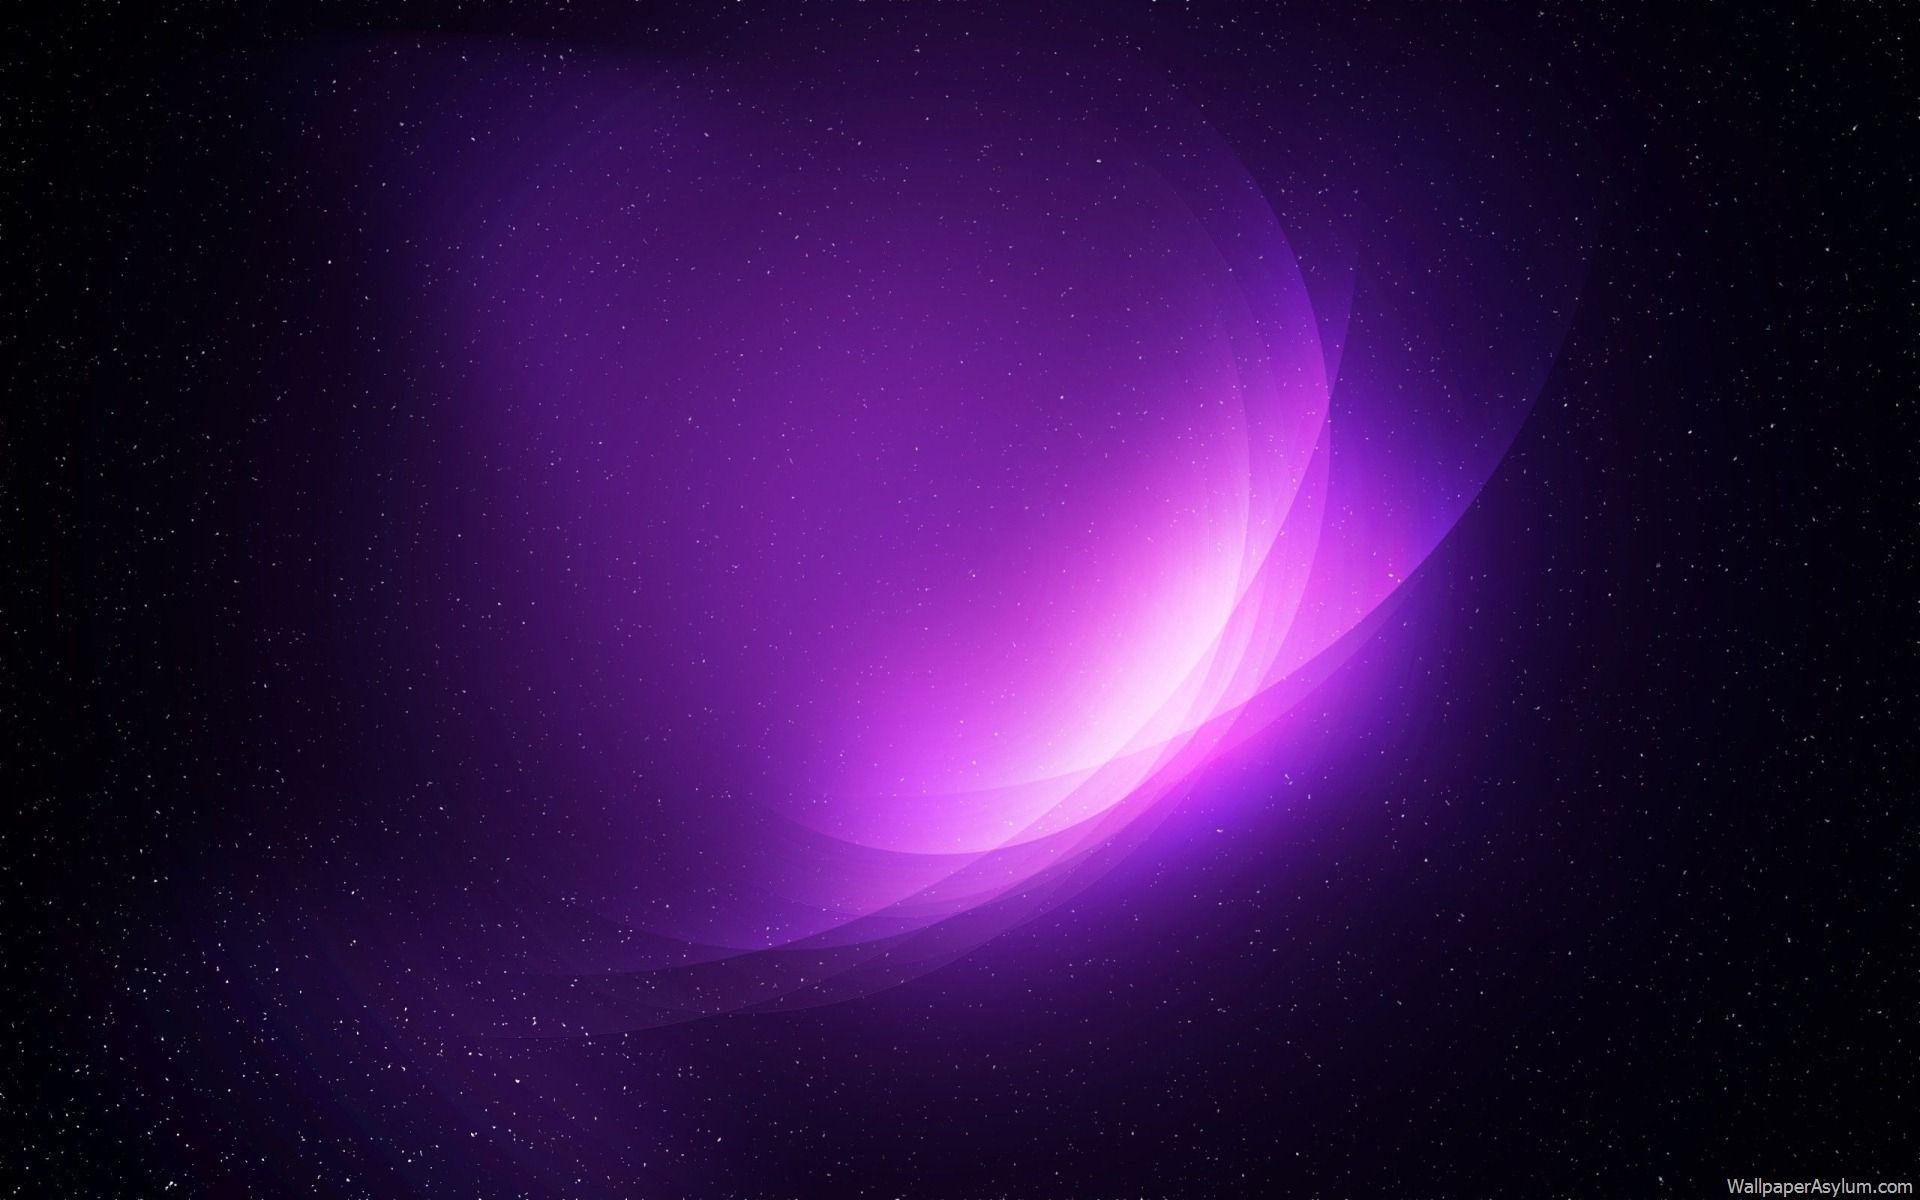 Dark Purple Abstract Background Image 6 HD Wallpaper